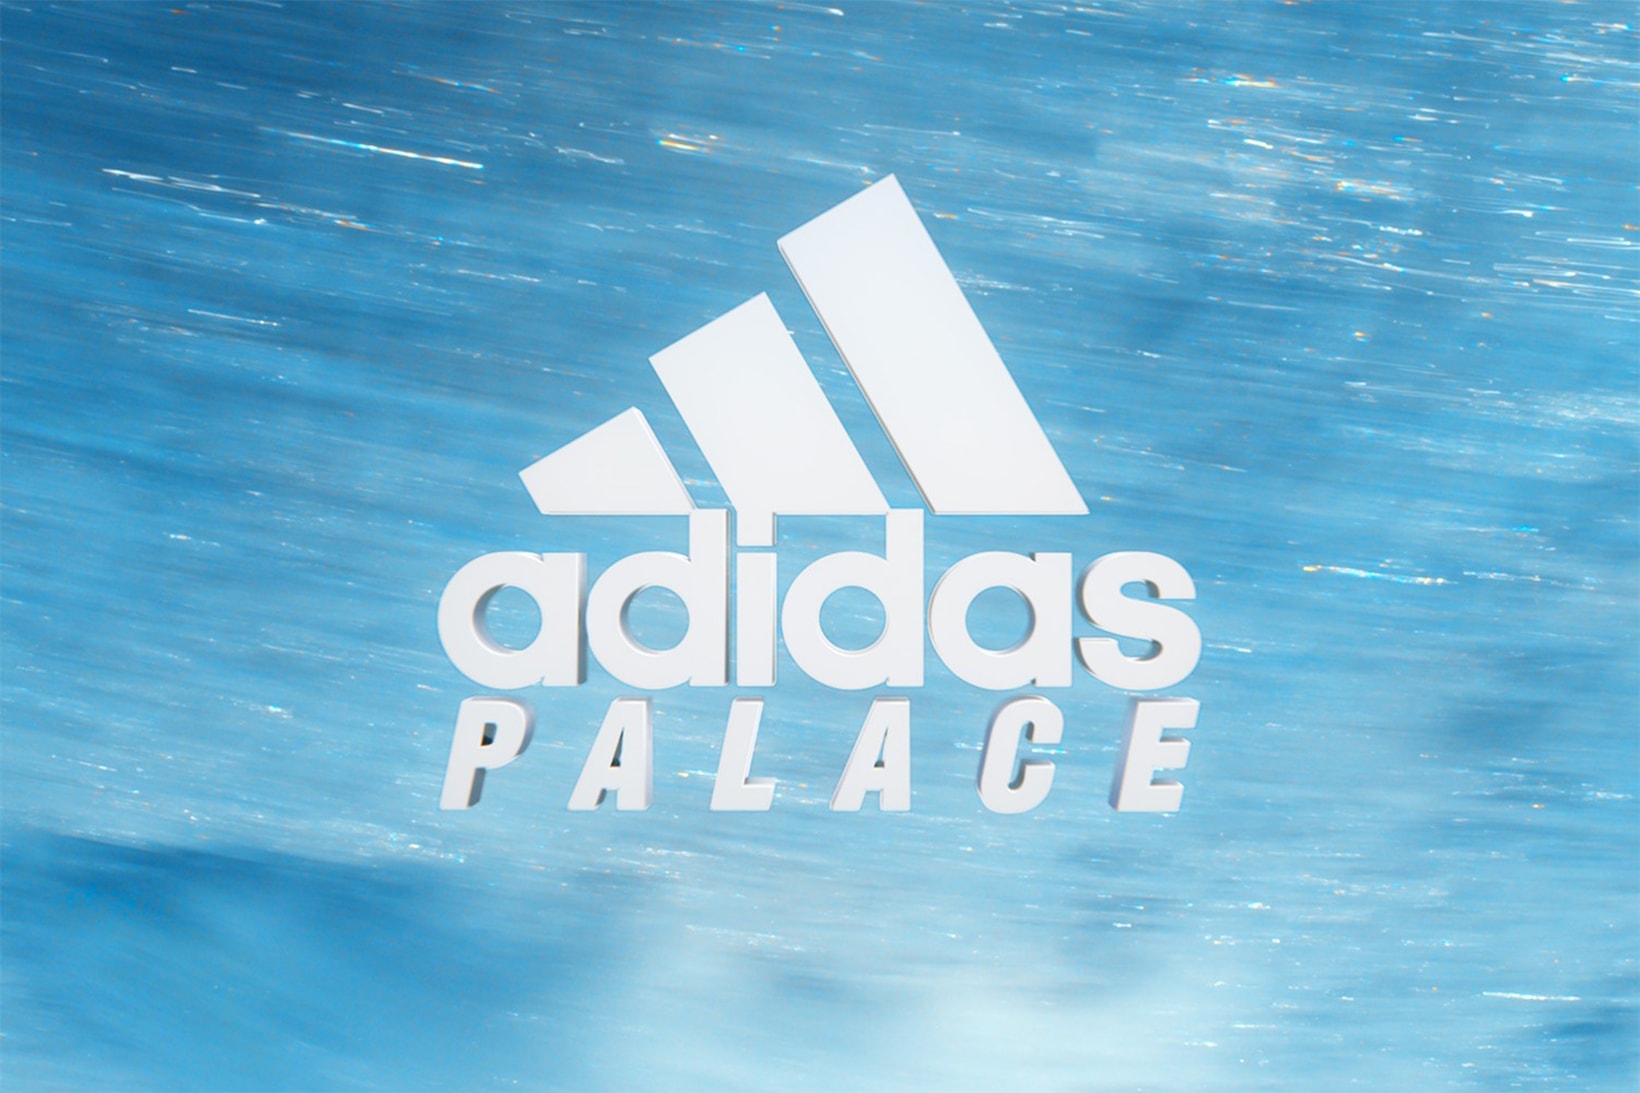 adidas palace skateboards sunpal collaboration sneak peek teaser